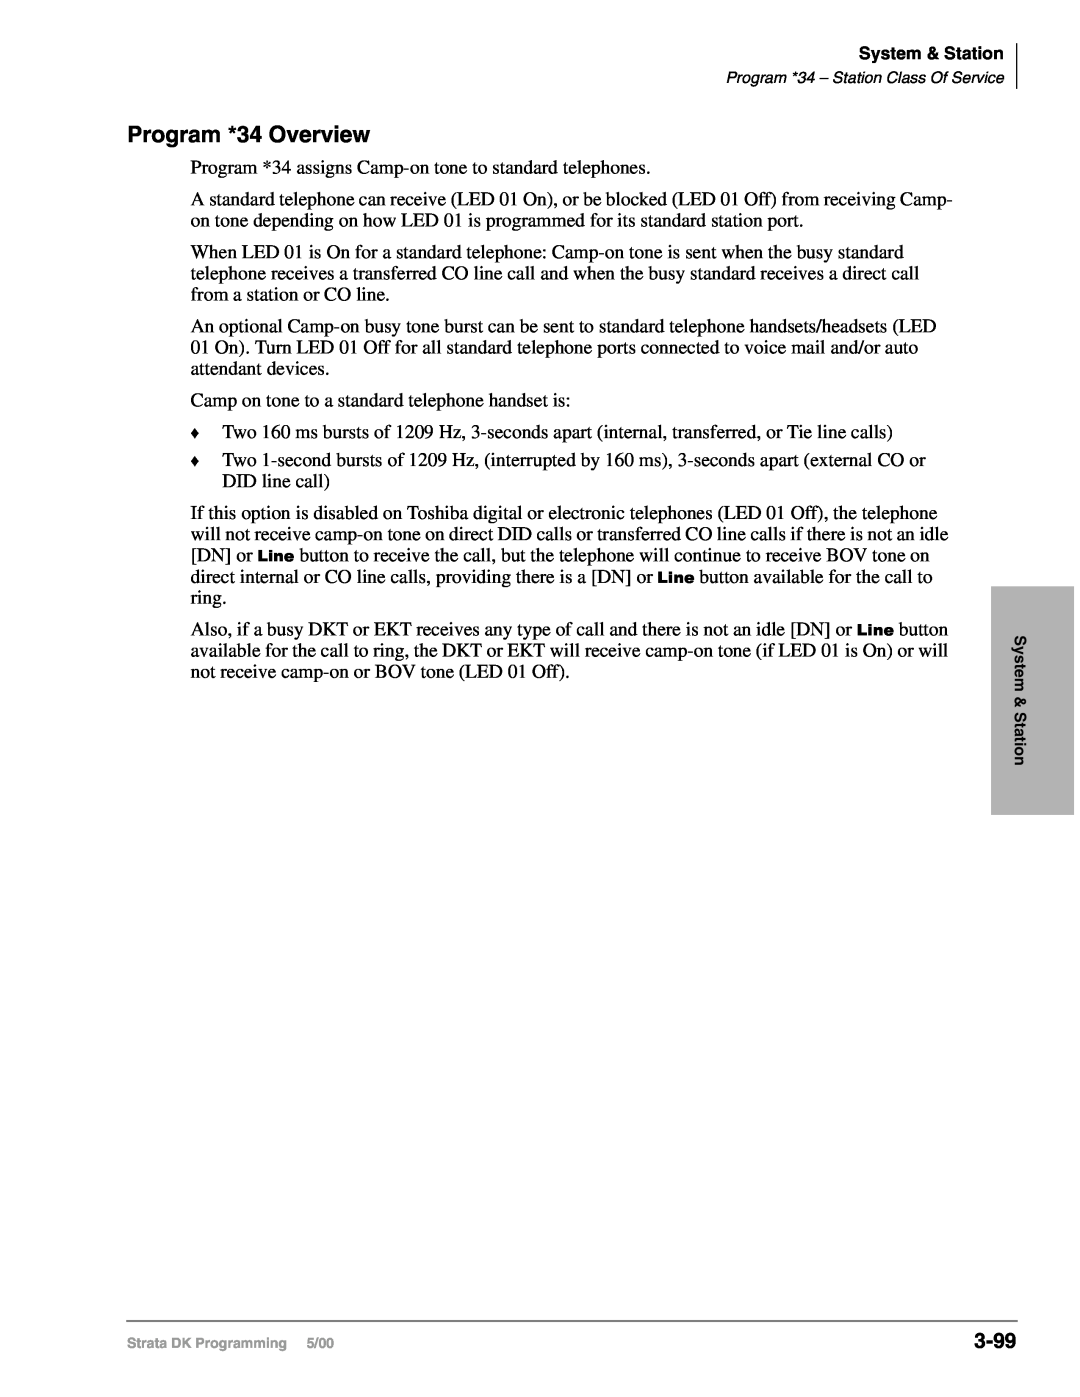 Toshiba DK424I, dk14, DK40I manual Program *34 Overview, 3-99 